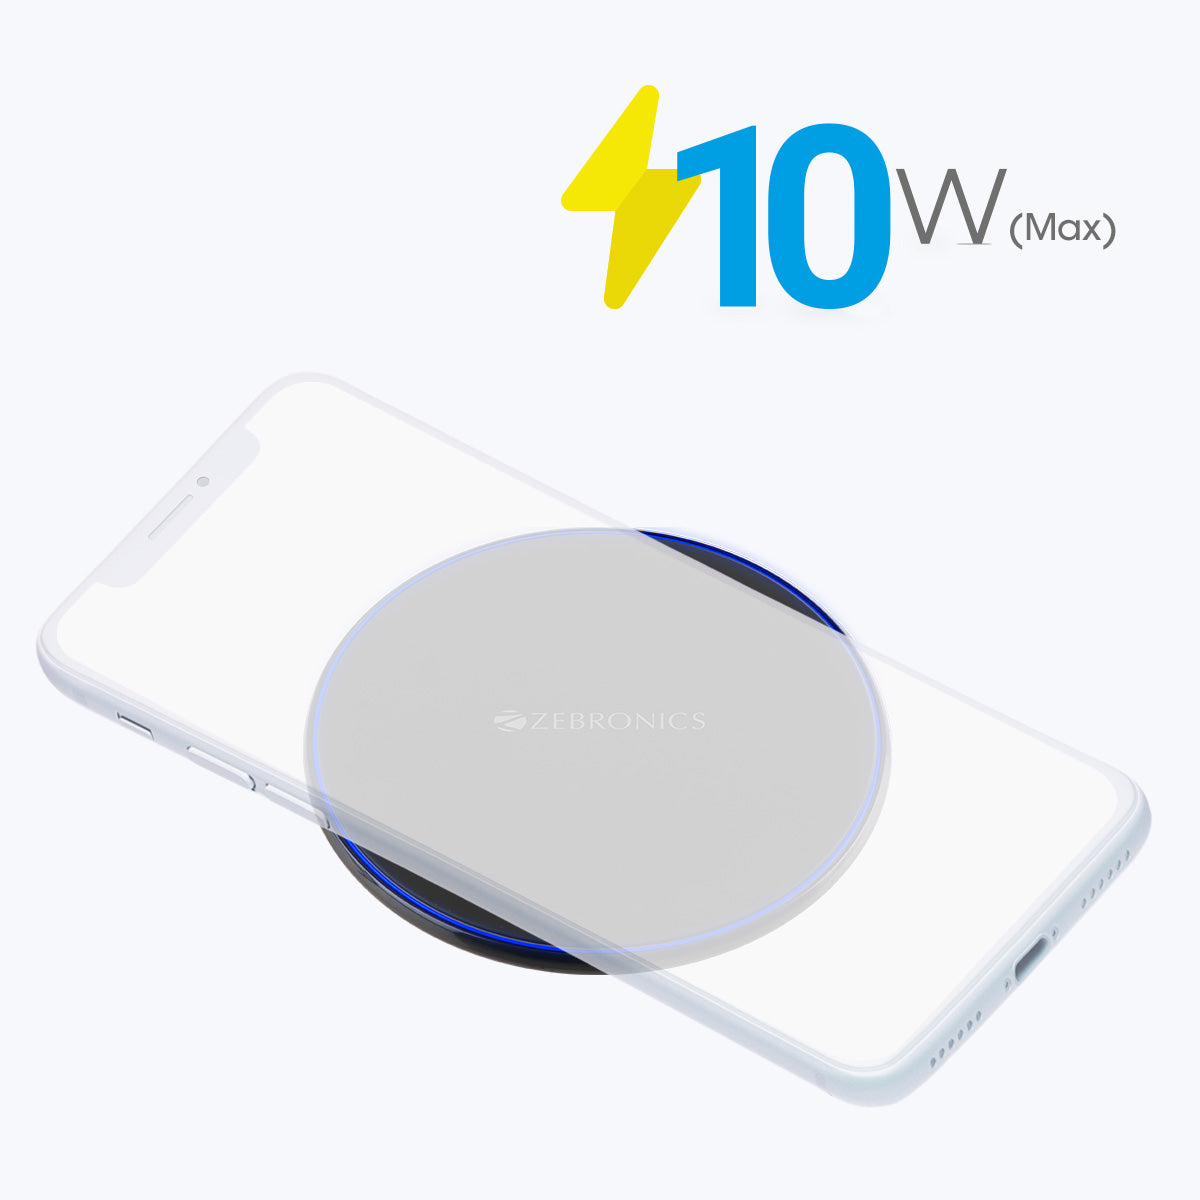 Zeb-WCP1001S - Wireless charging pad - Zebronics